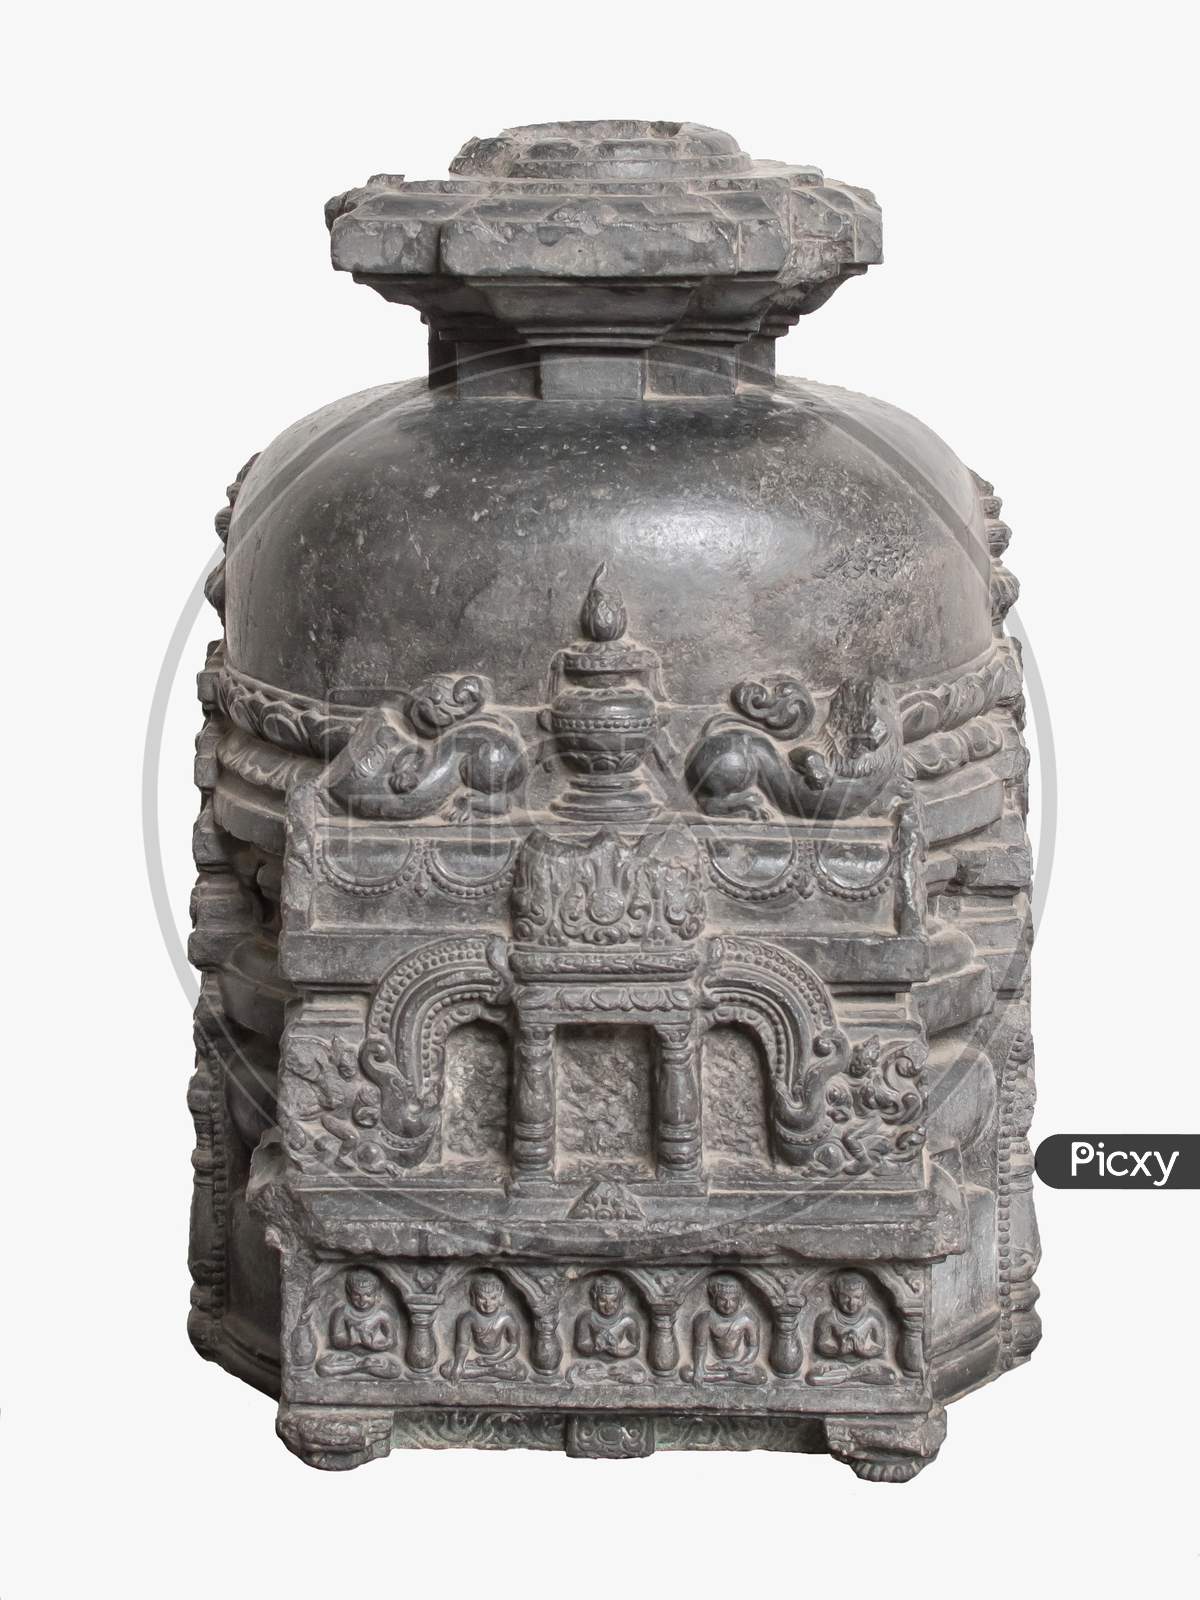 Archaeological Sculpture Of Votive Stupa From Indian Mythology